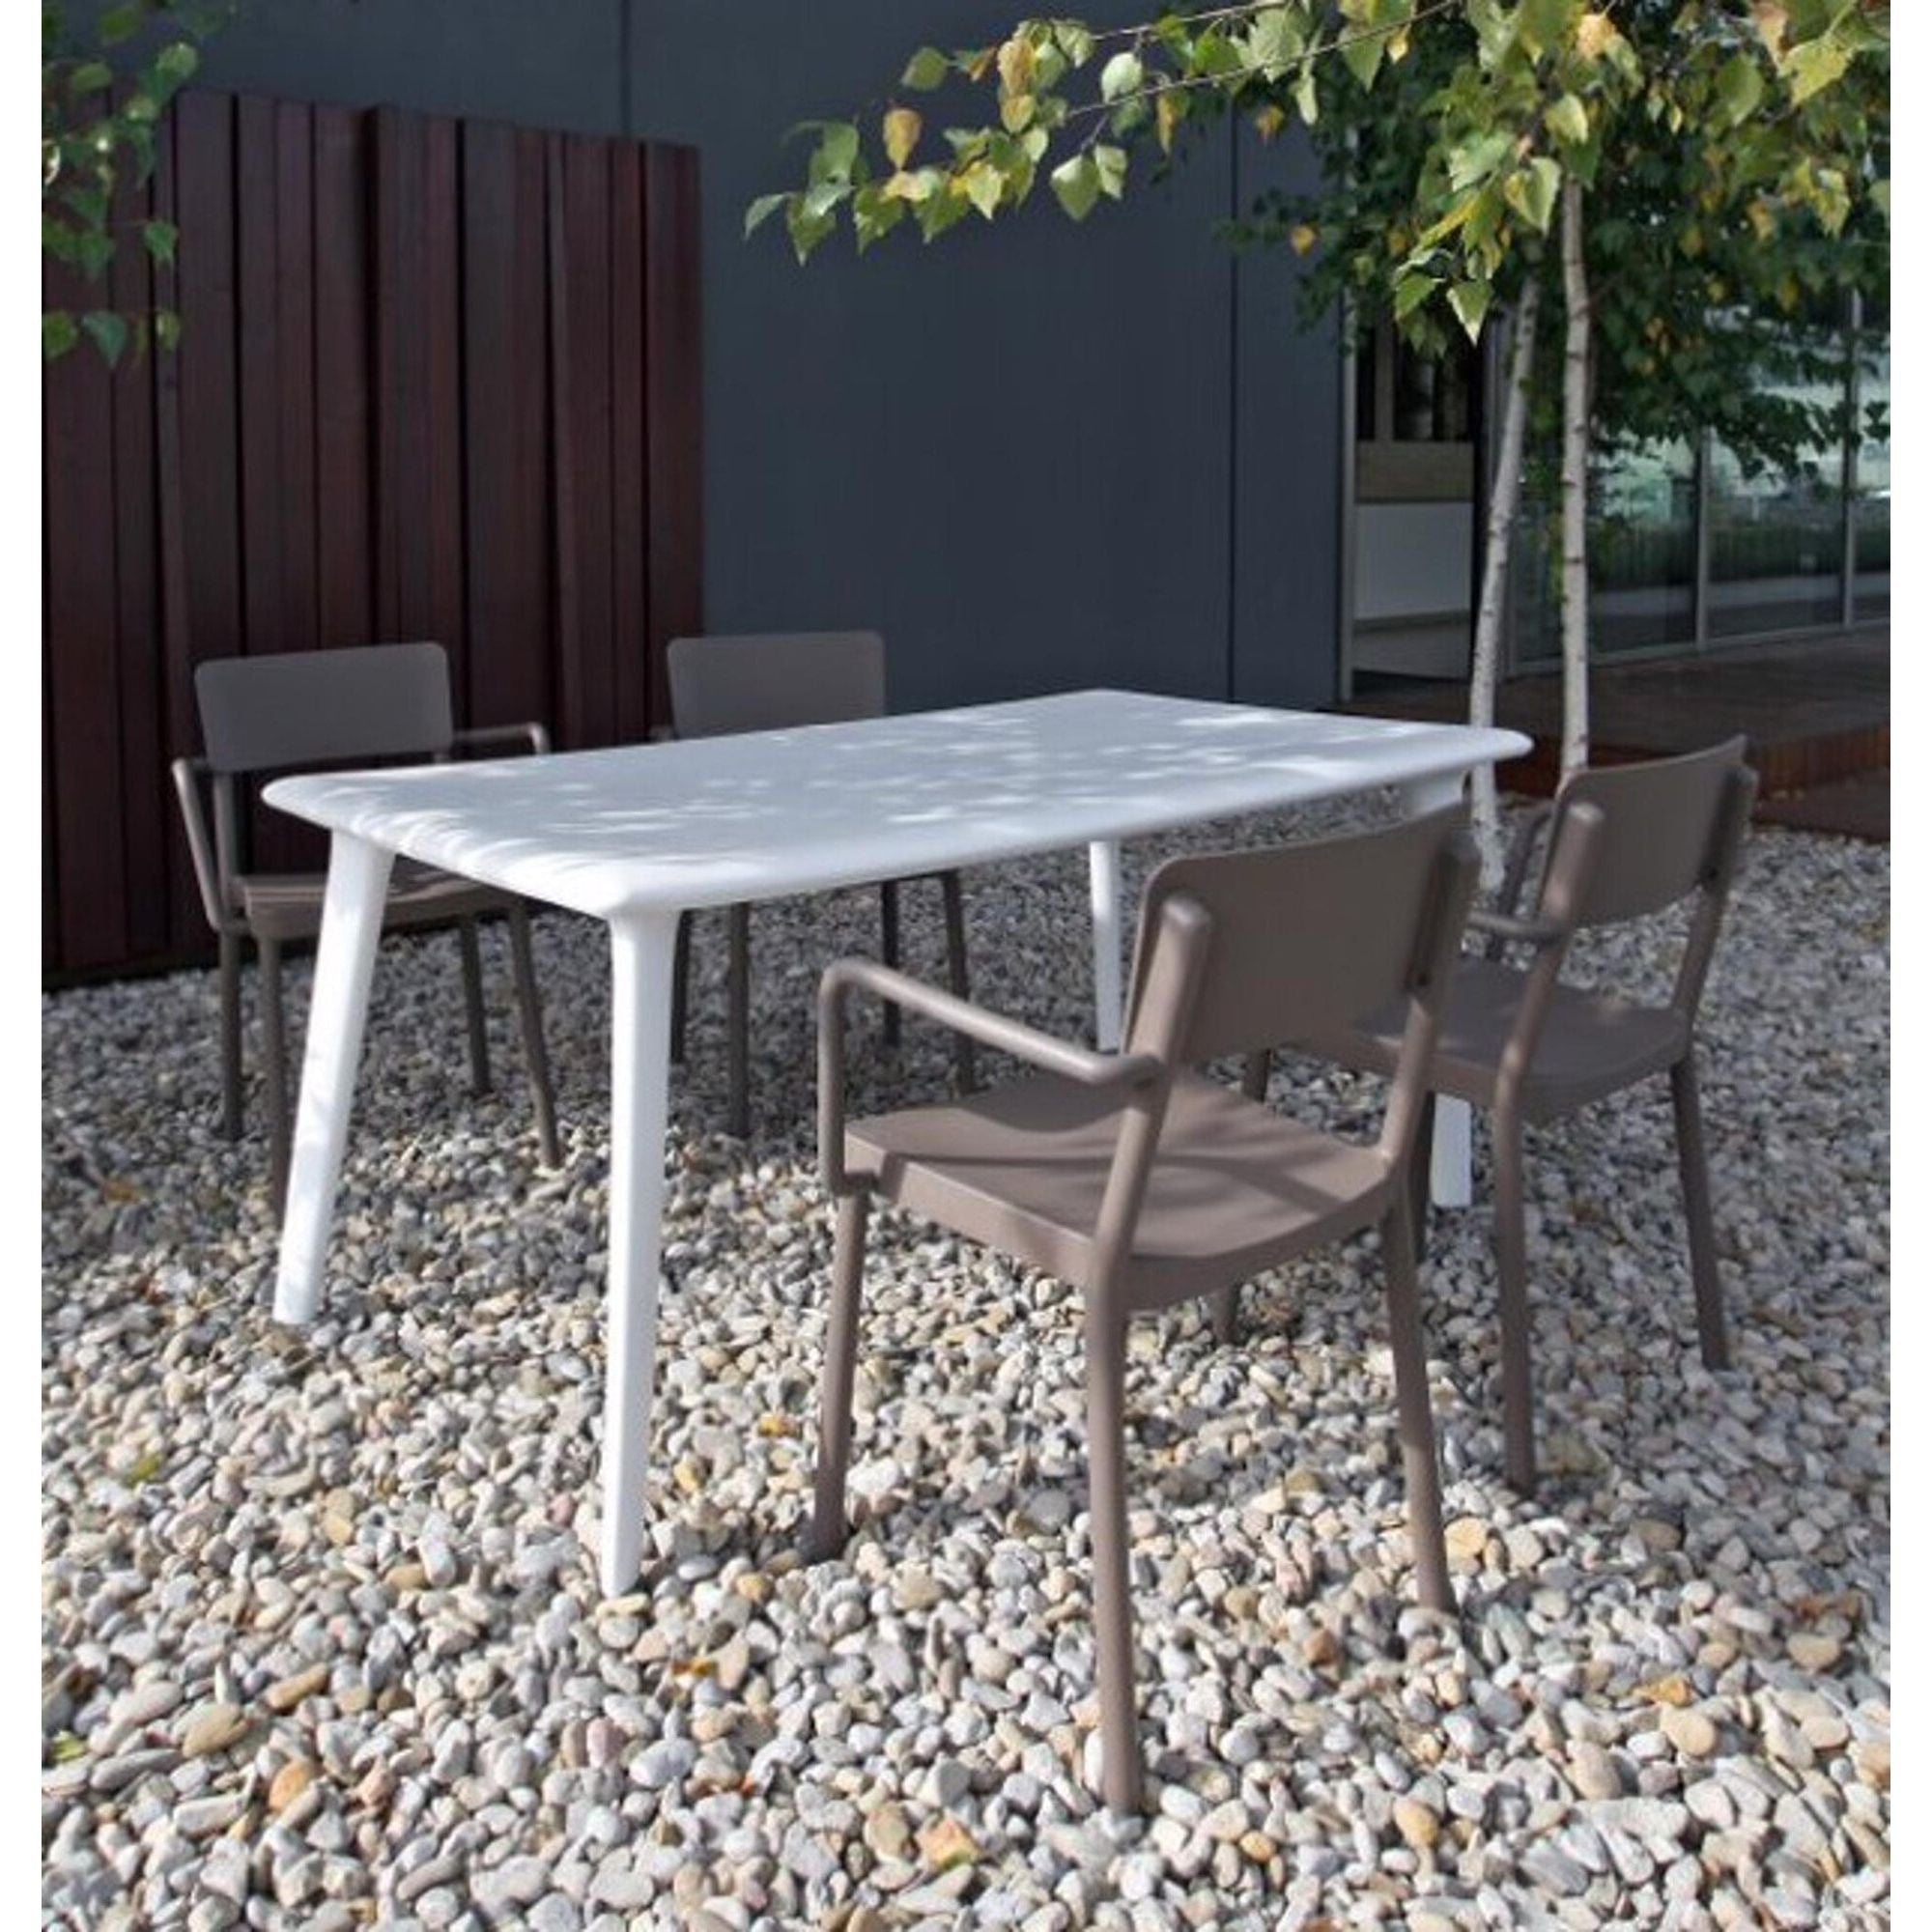 Resol new dessa rectangular table indoors, outdoors 160x90